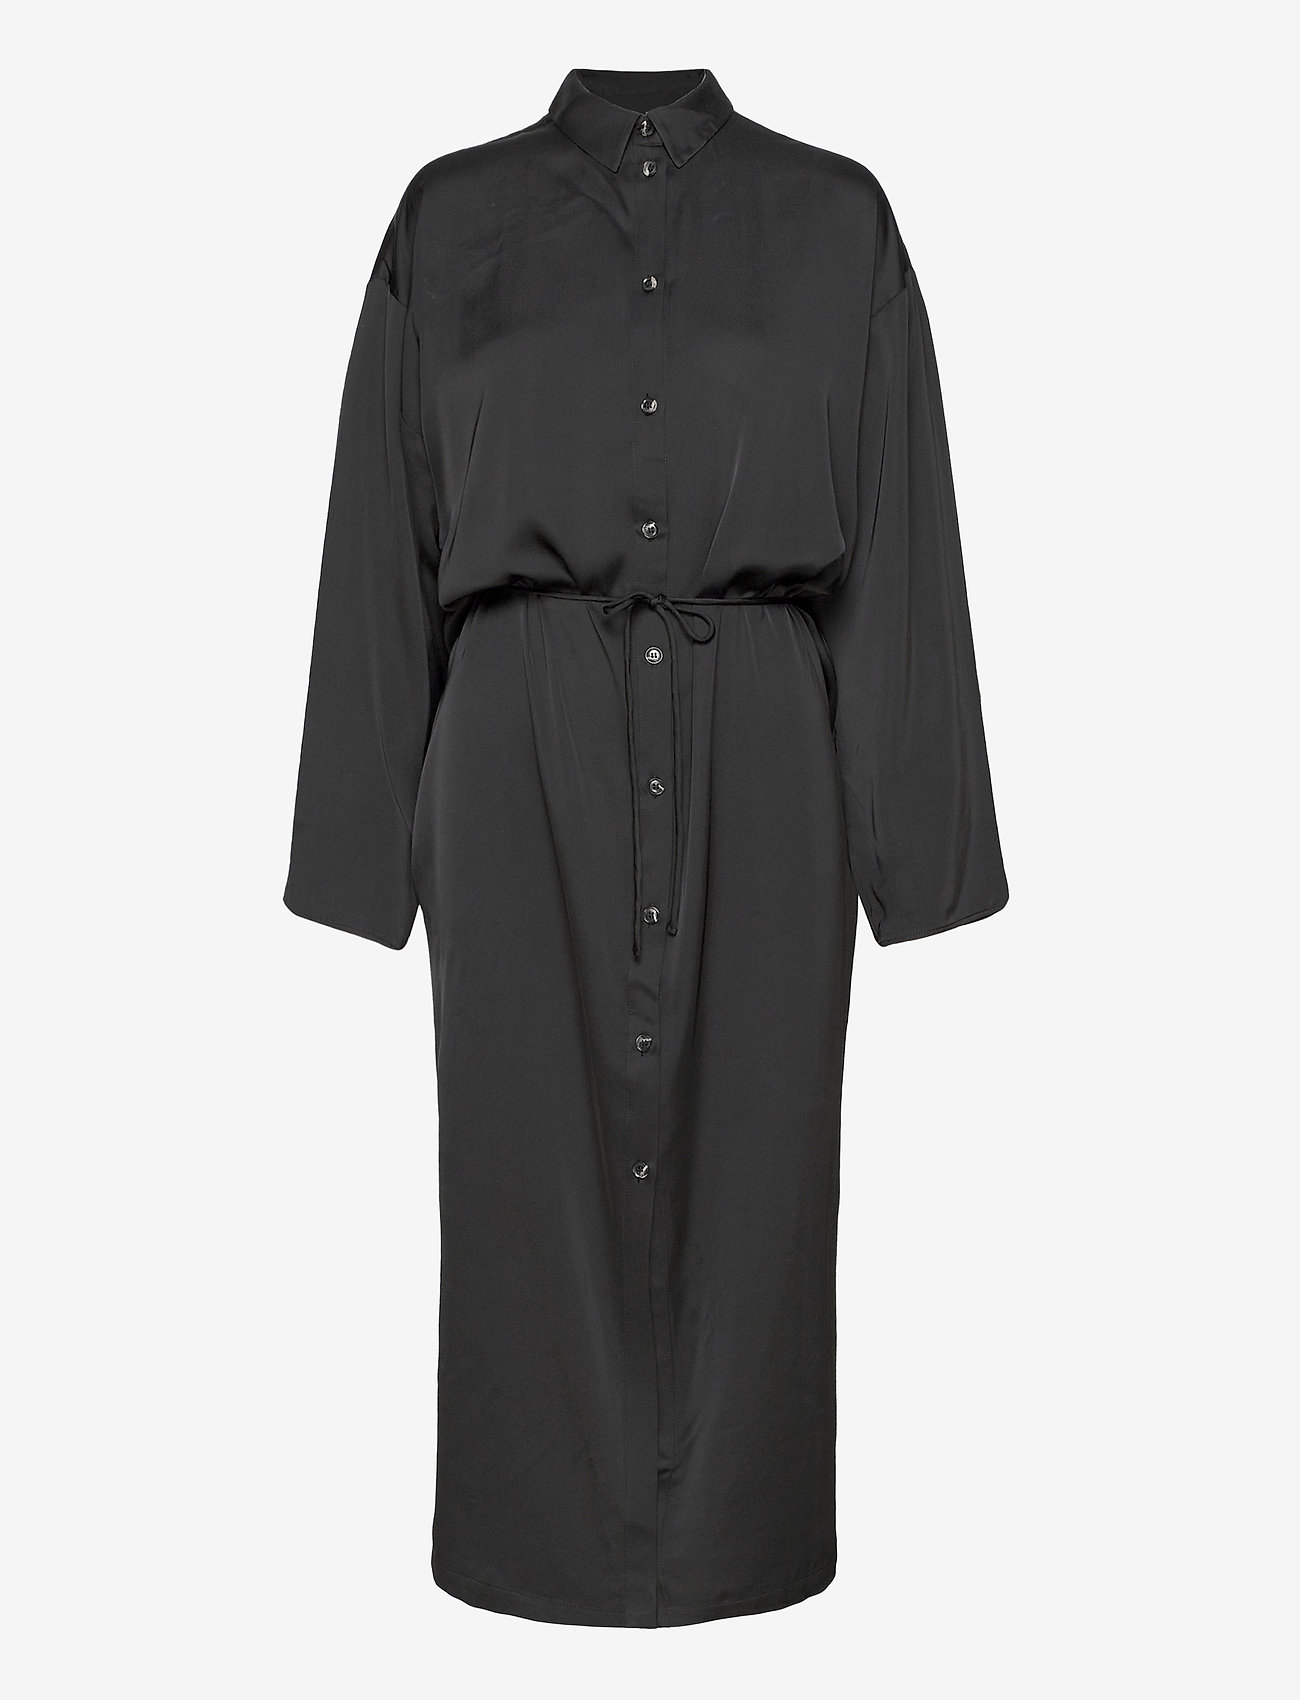 DESIGNERS, REMIX - Emmy Straight Dress - shirt dresses - black - 0